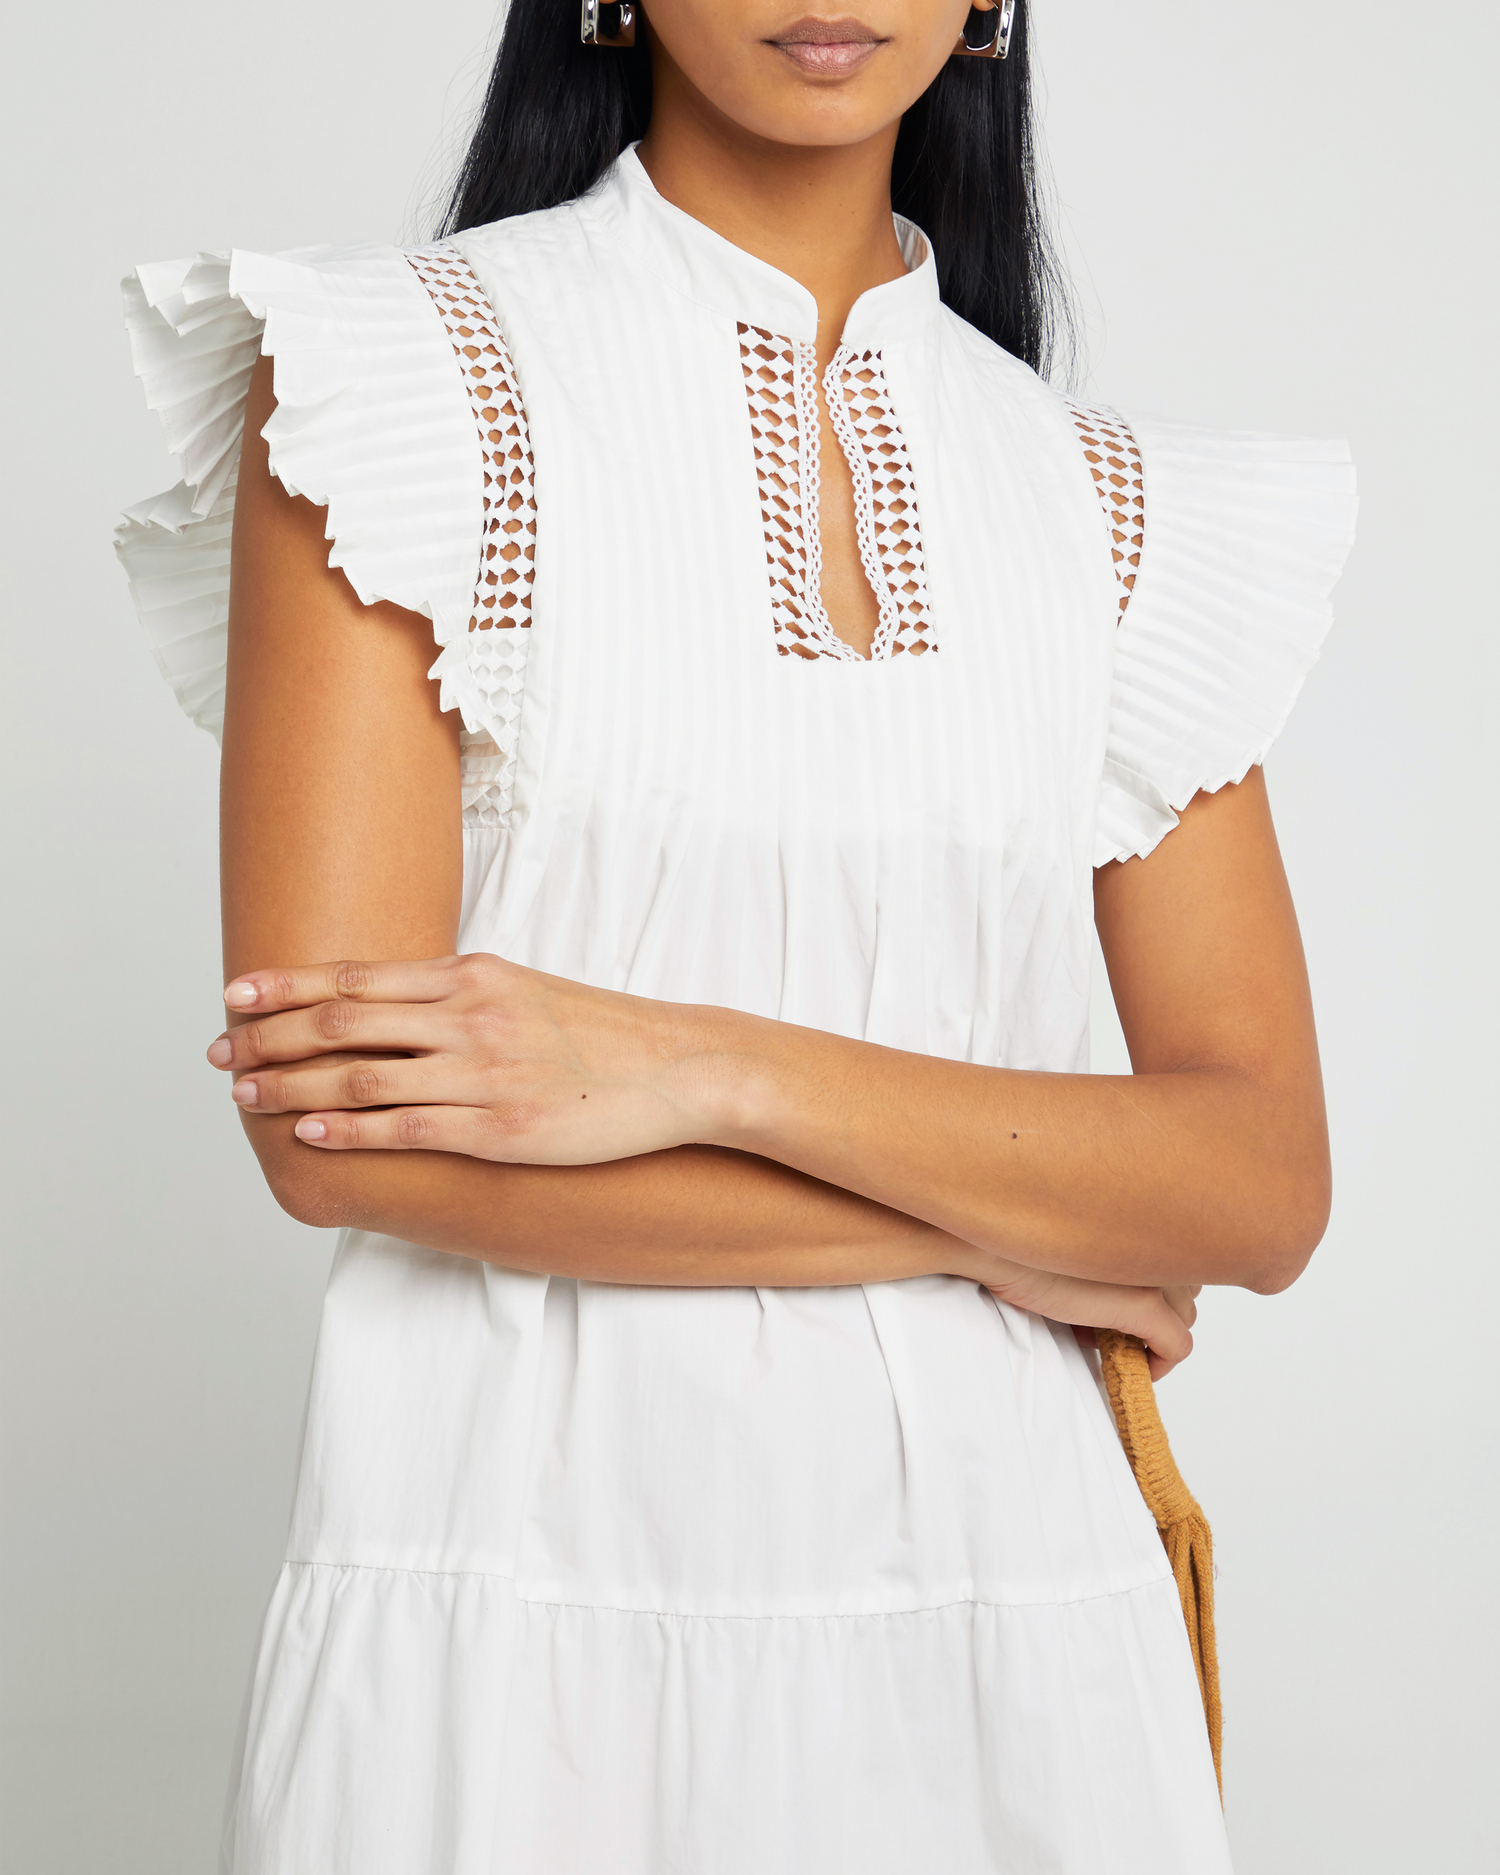 Sixth image of Callan Dress, a white mini dress, lace detail, ruffle cap sleeves, panel, pleats